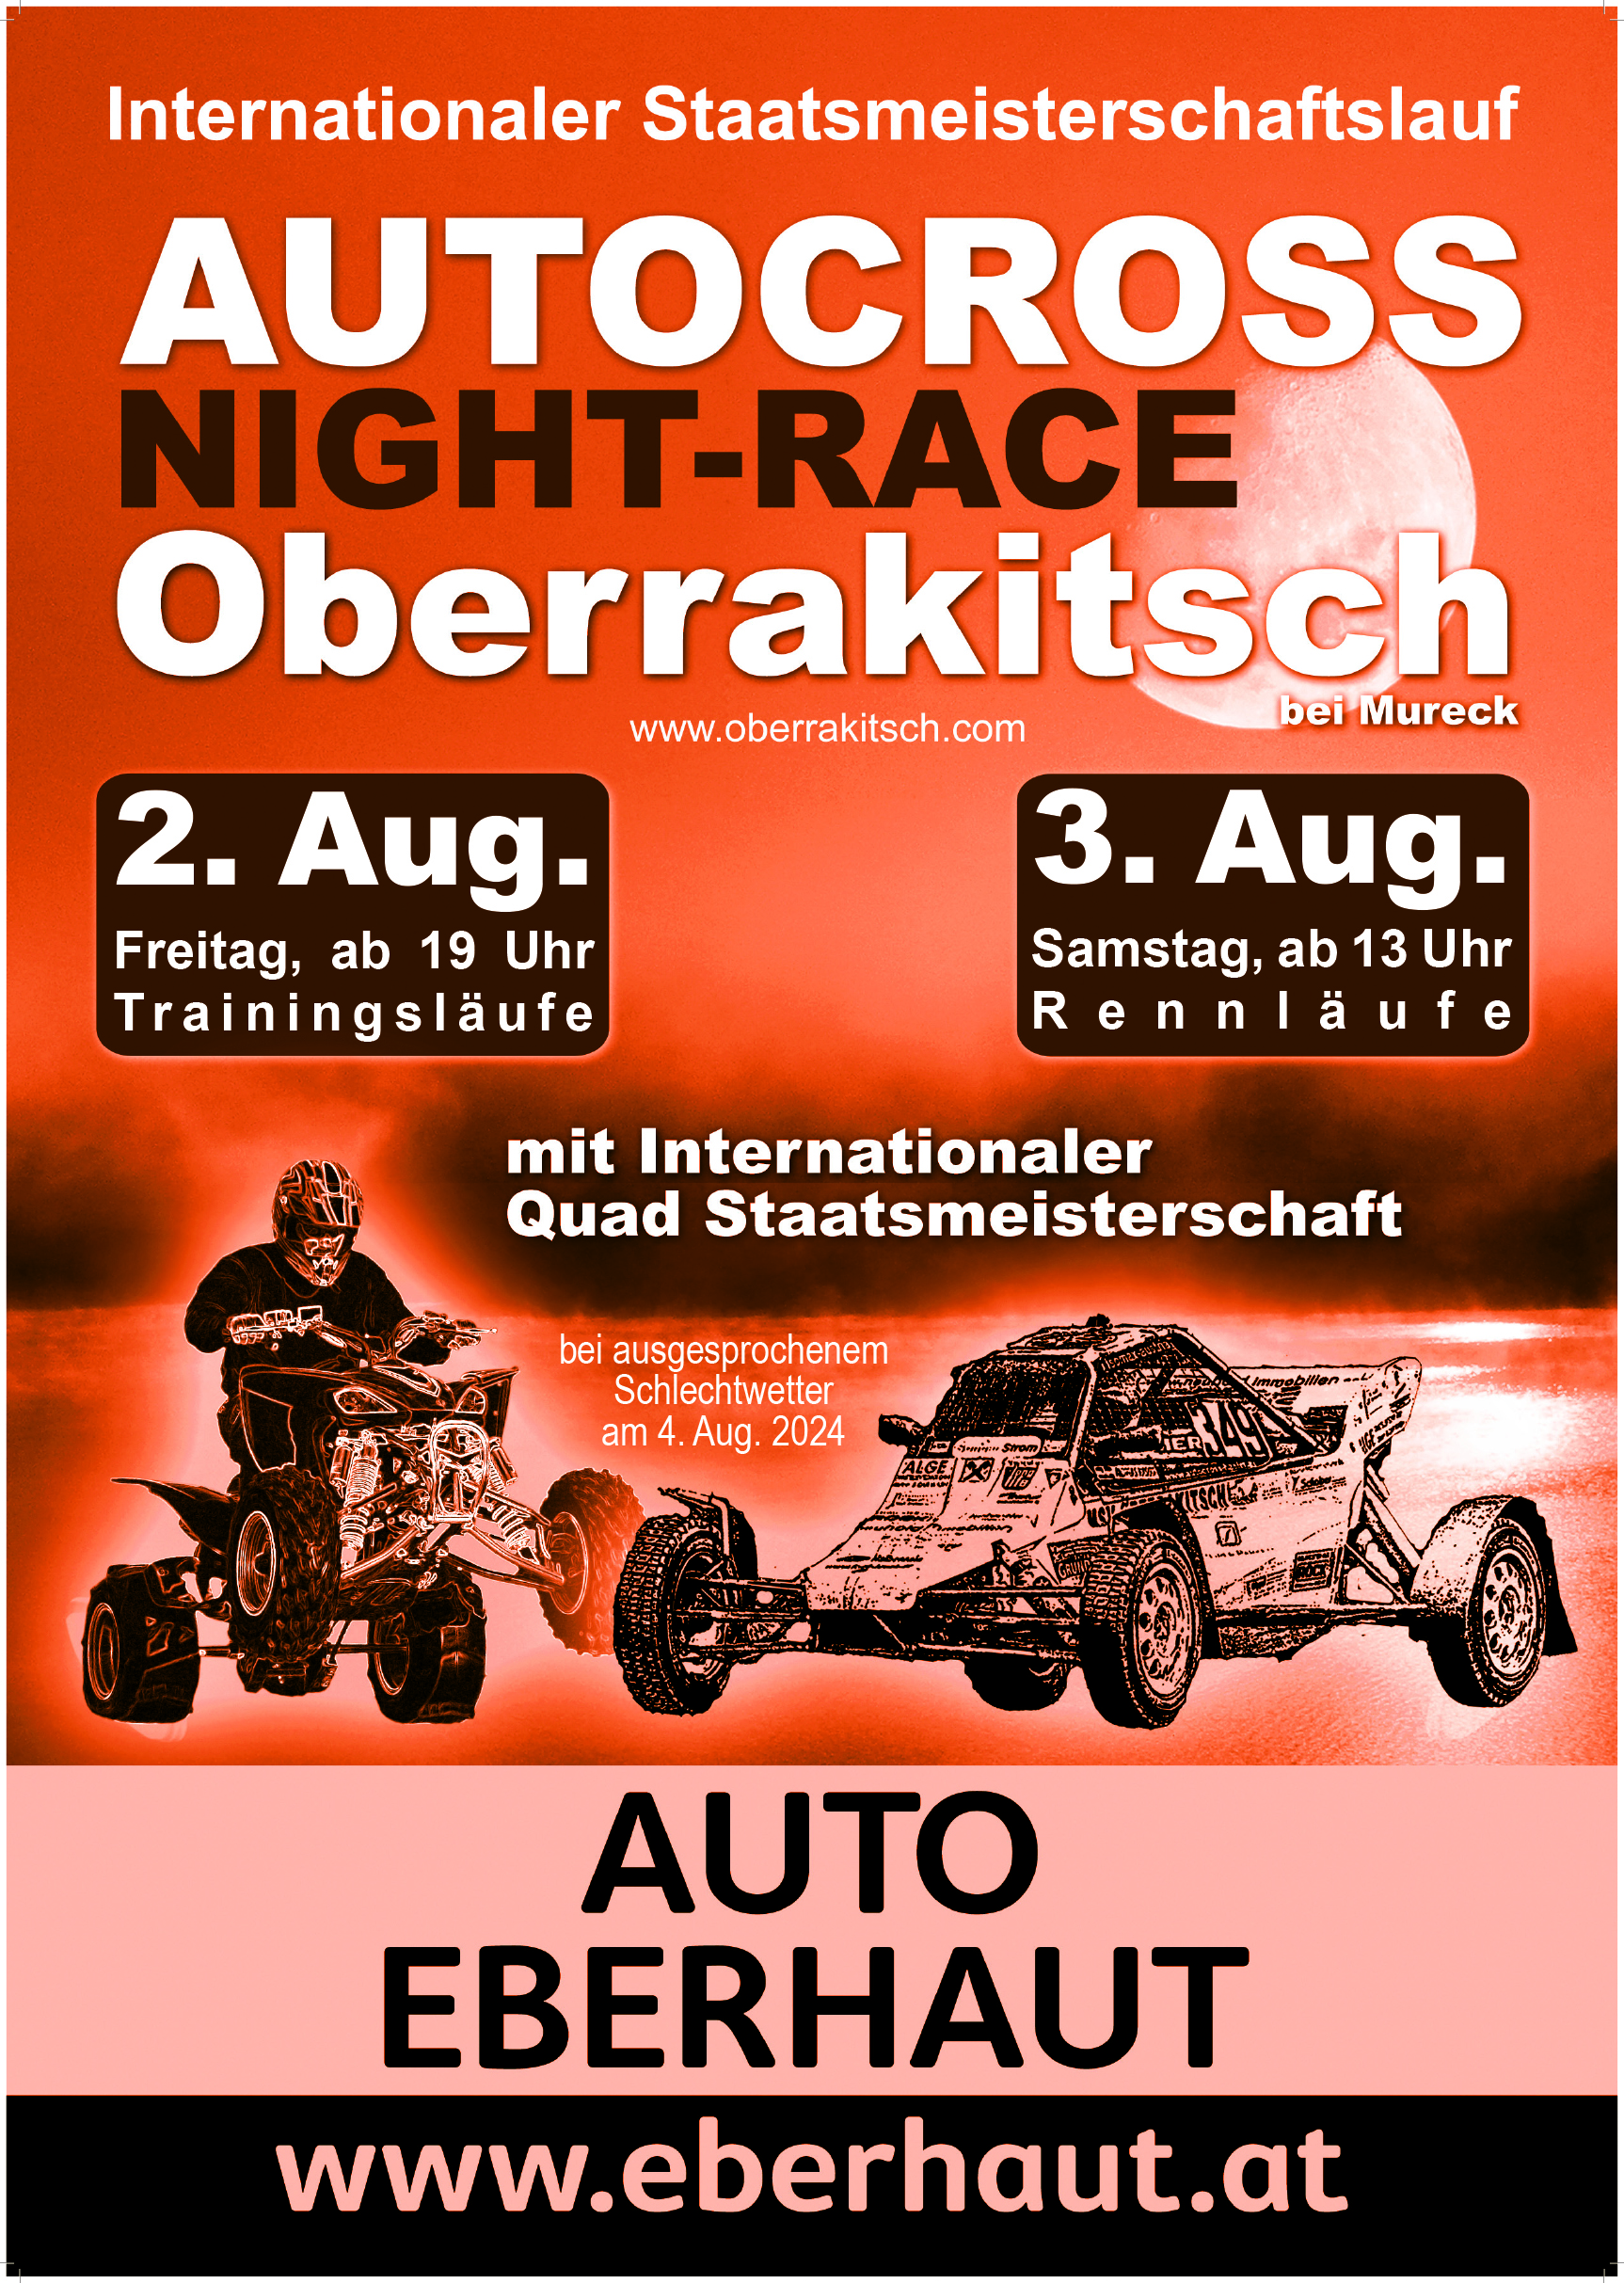 Autocross NIGHT-RACE